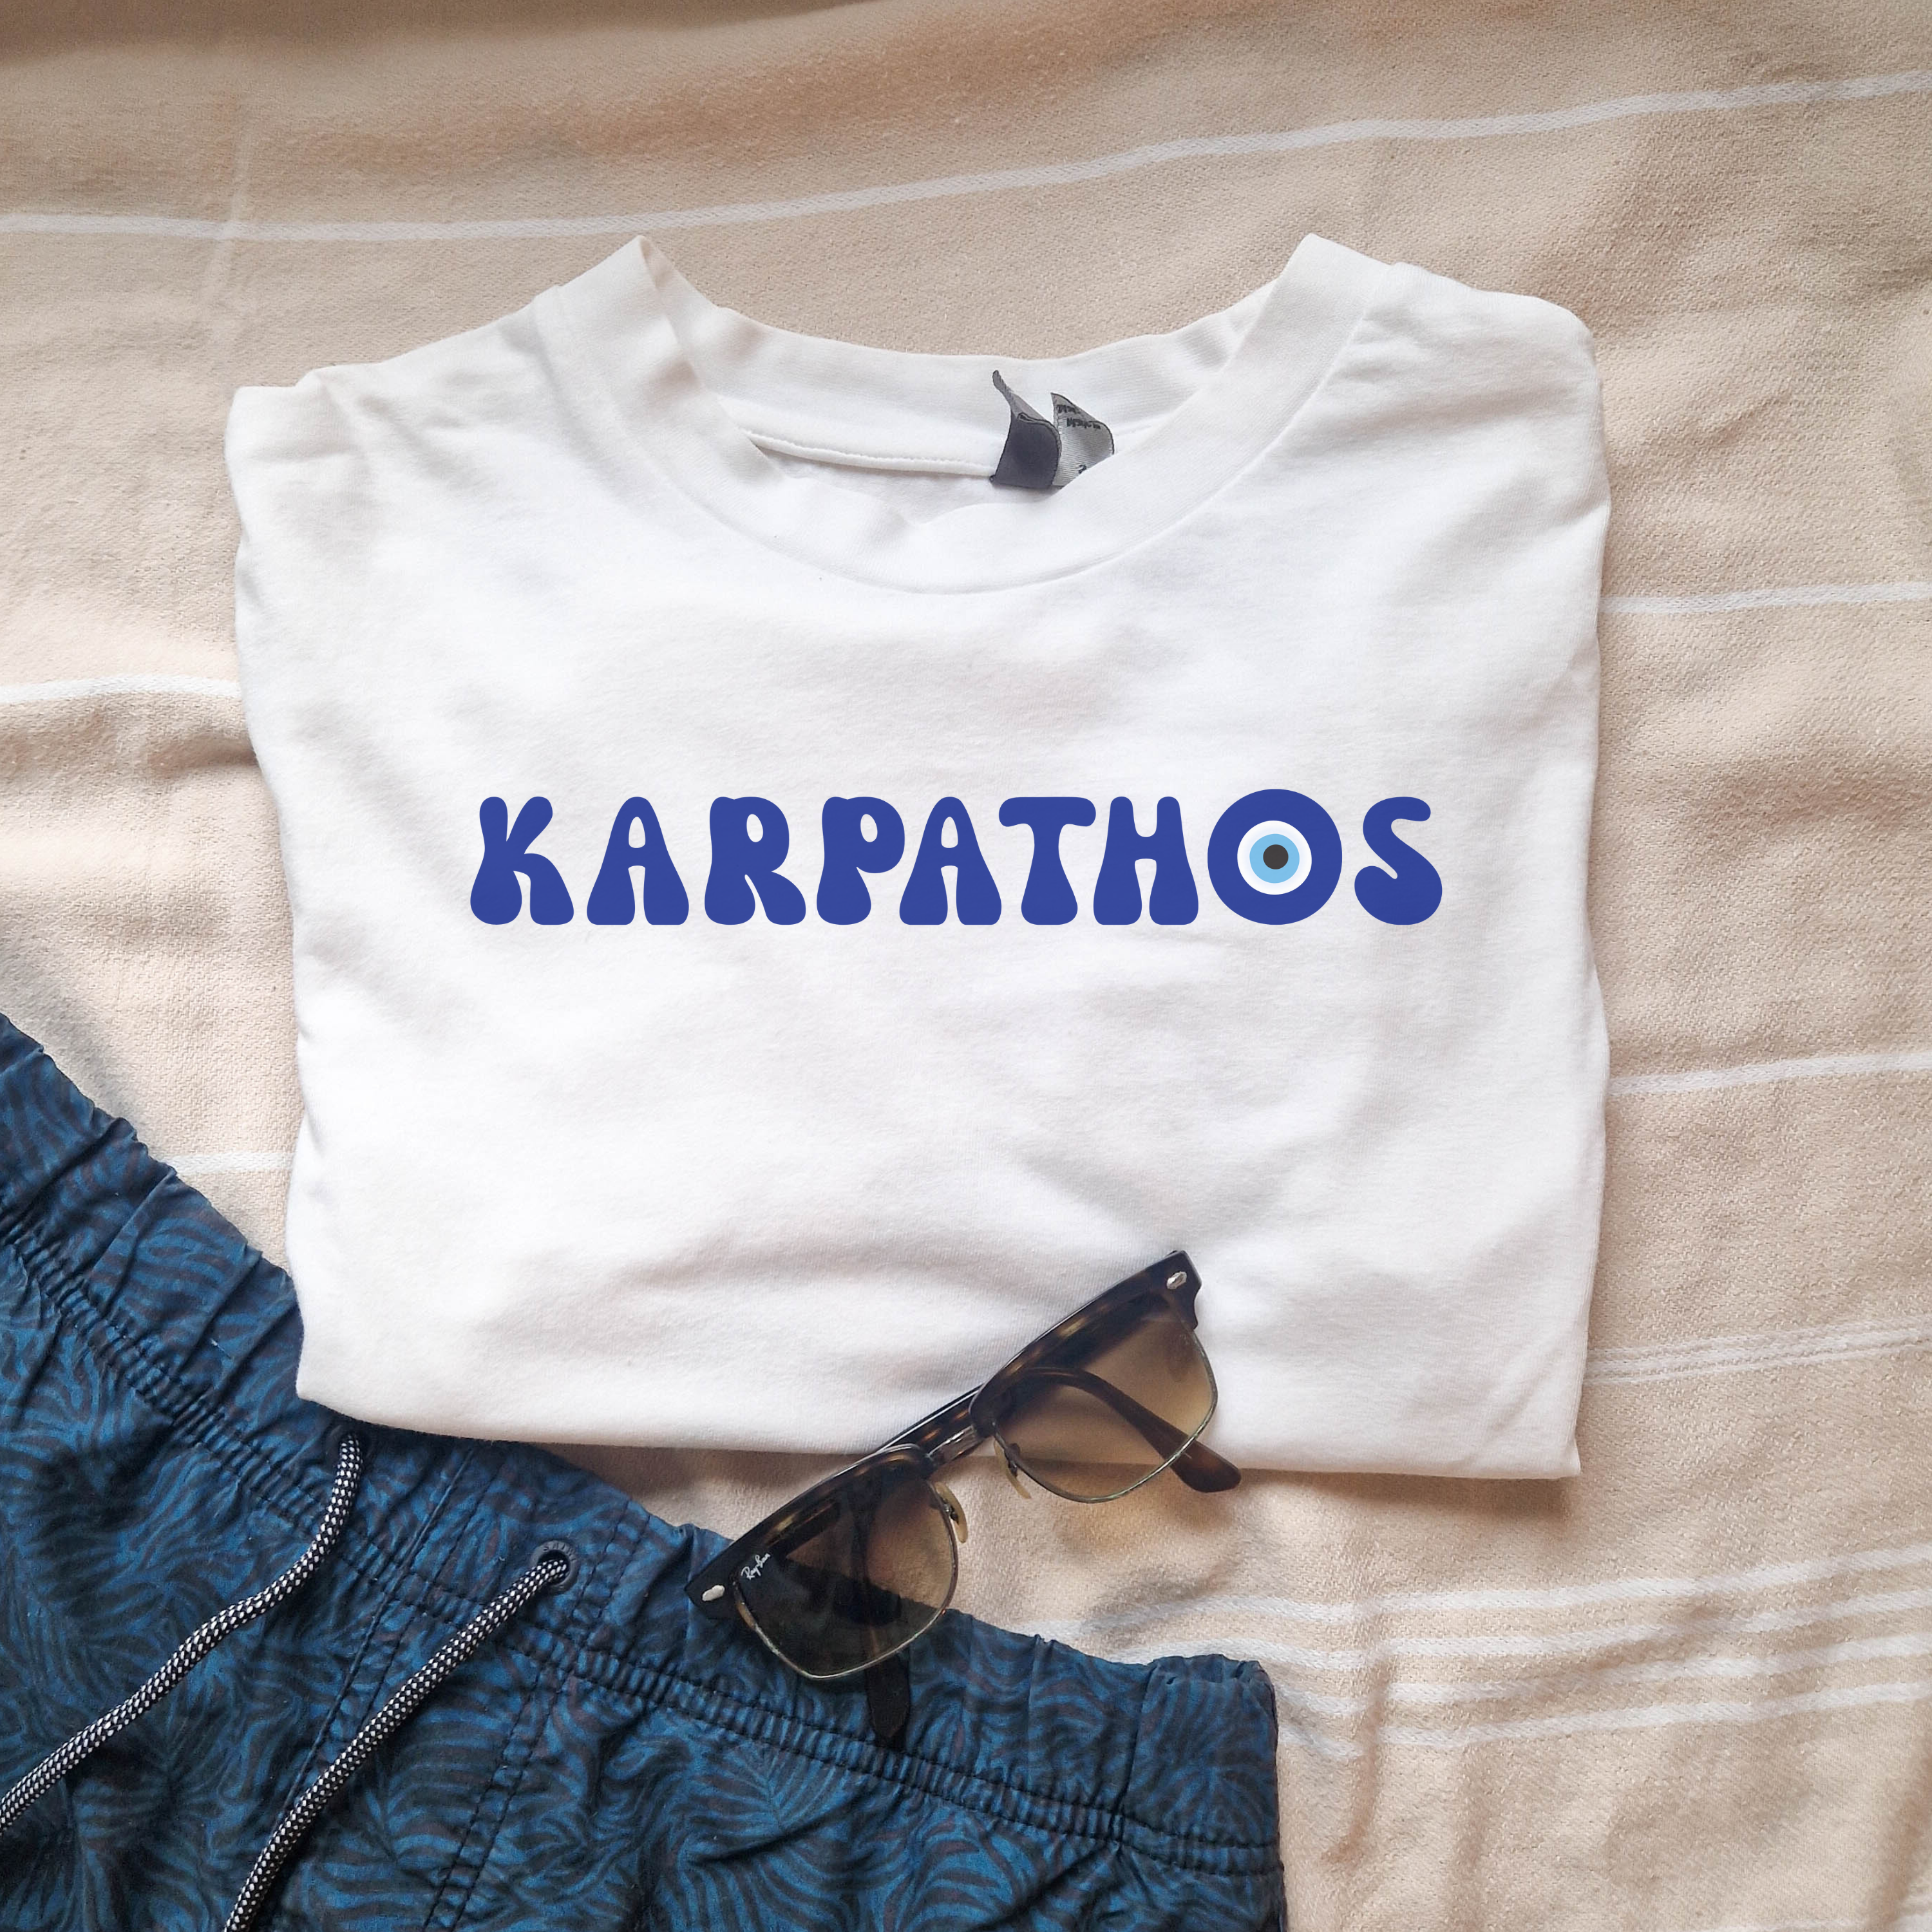 Karpathos shirt Greece travel shirt (1)